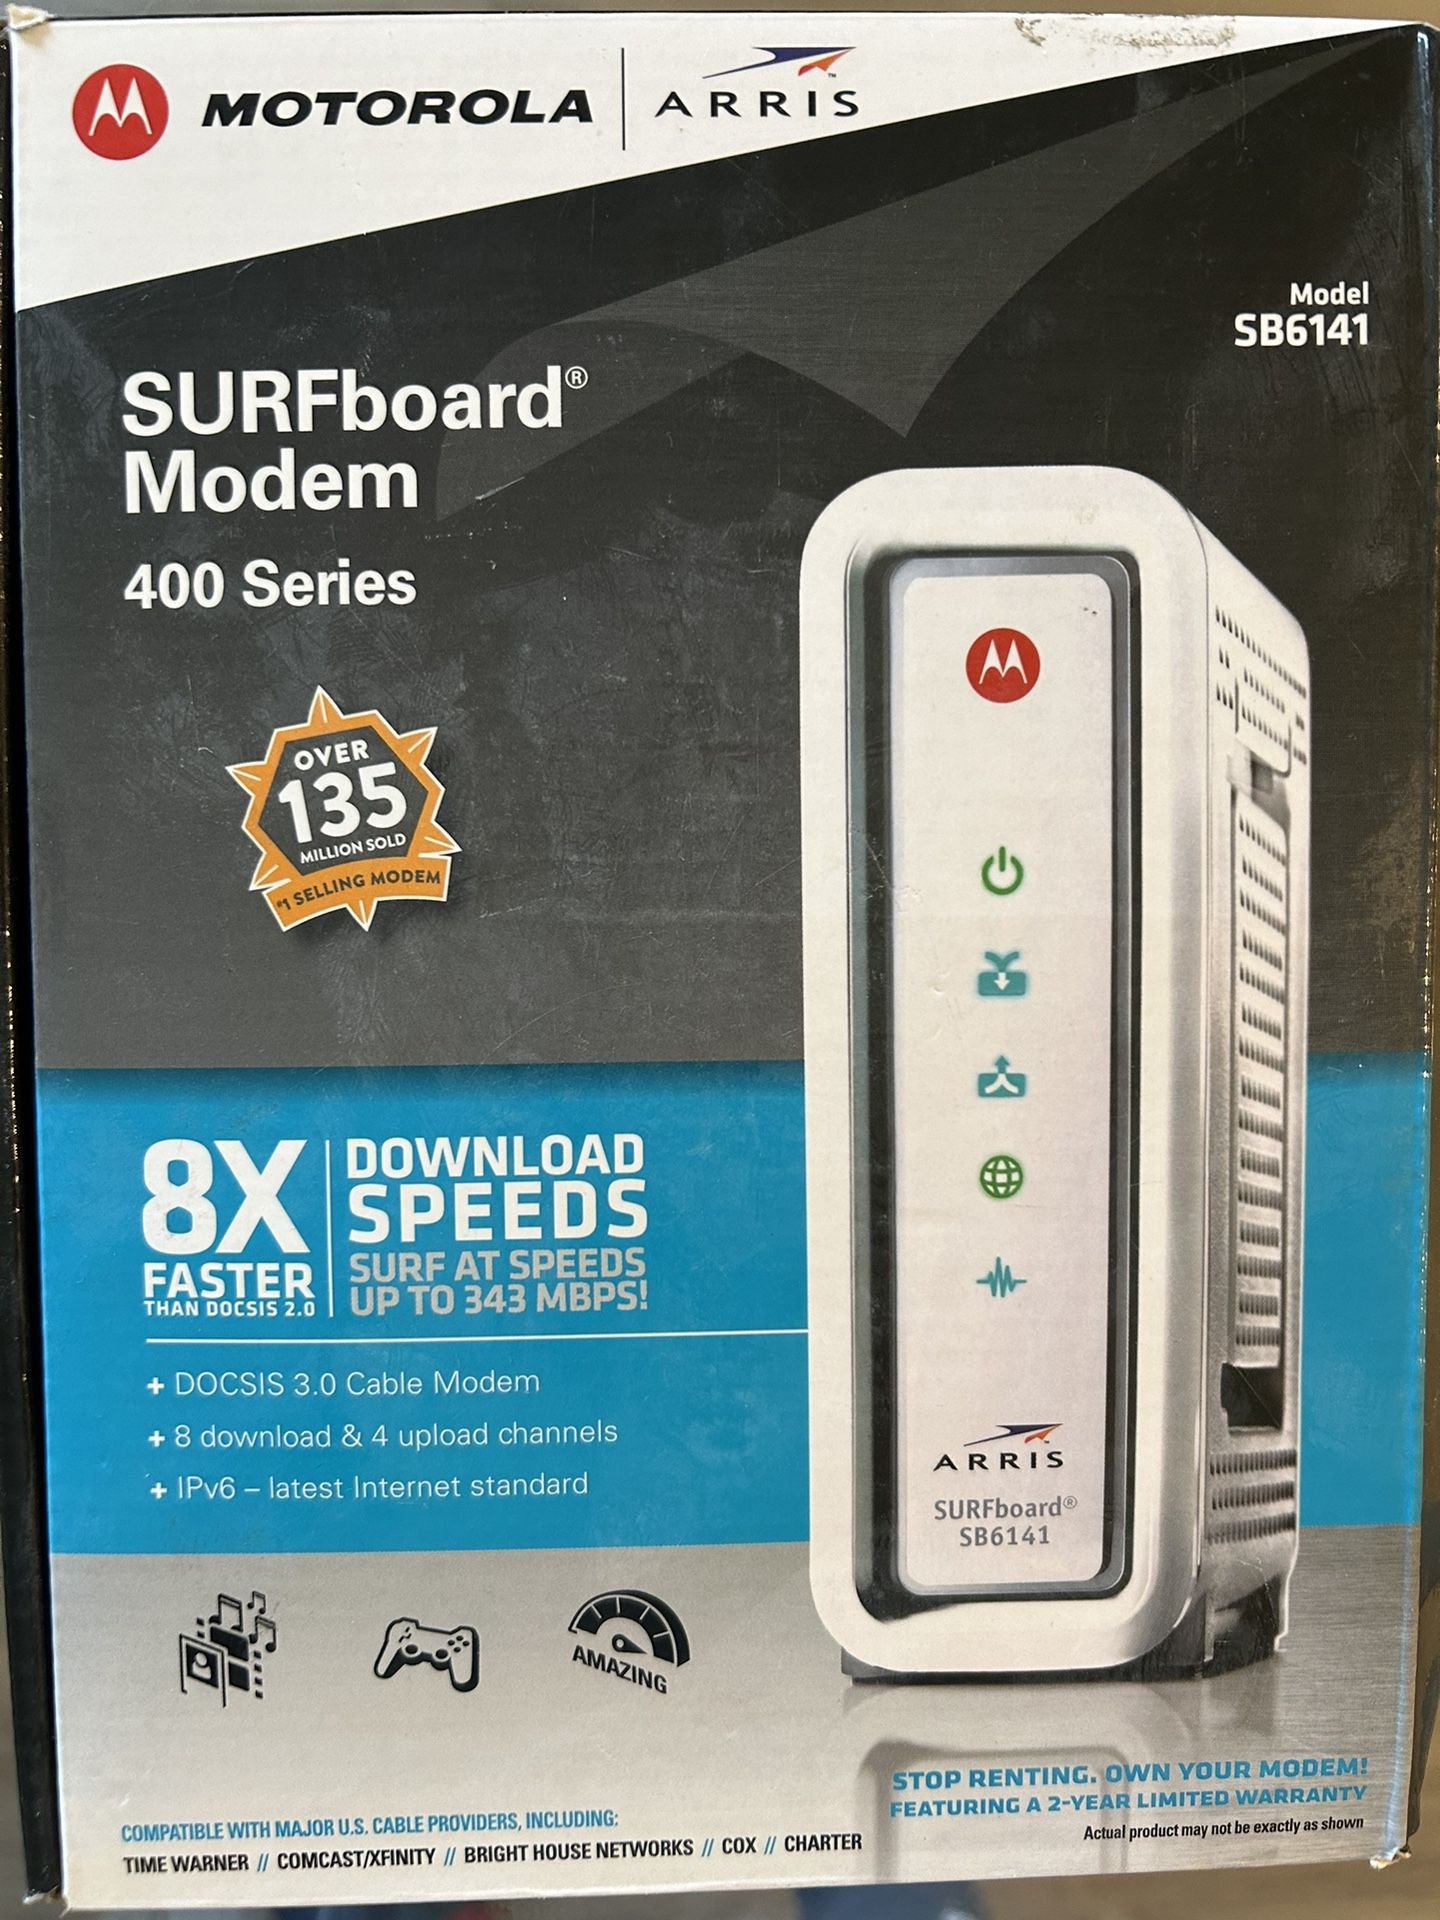 ARRIS SURFboard SB6141 Modem